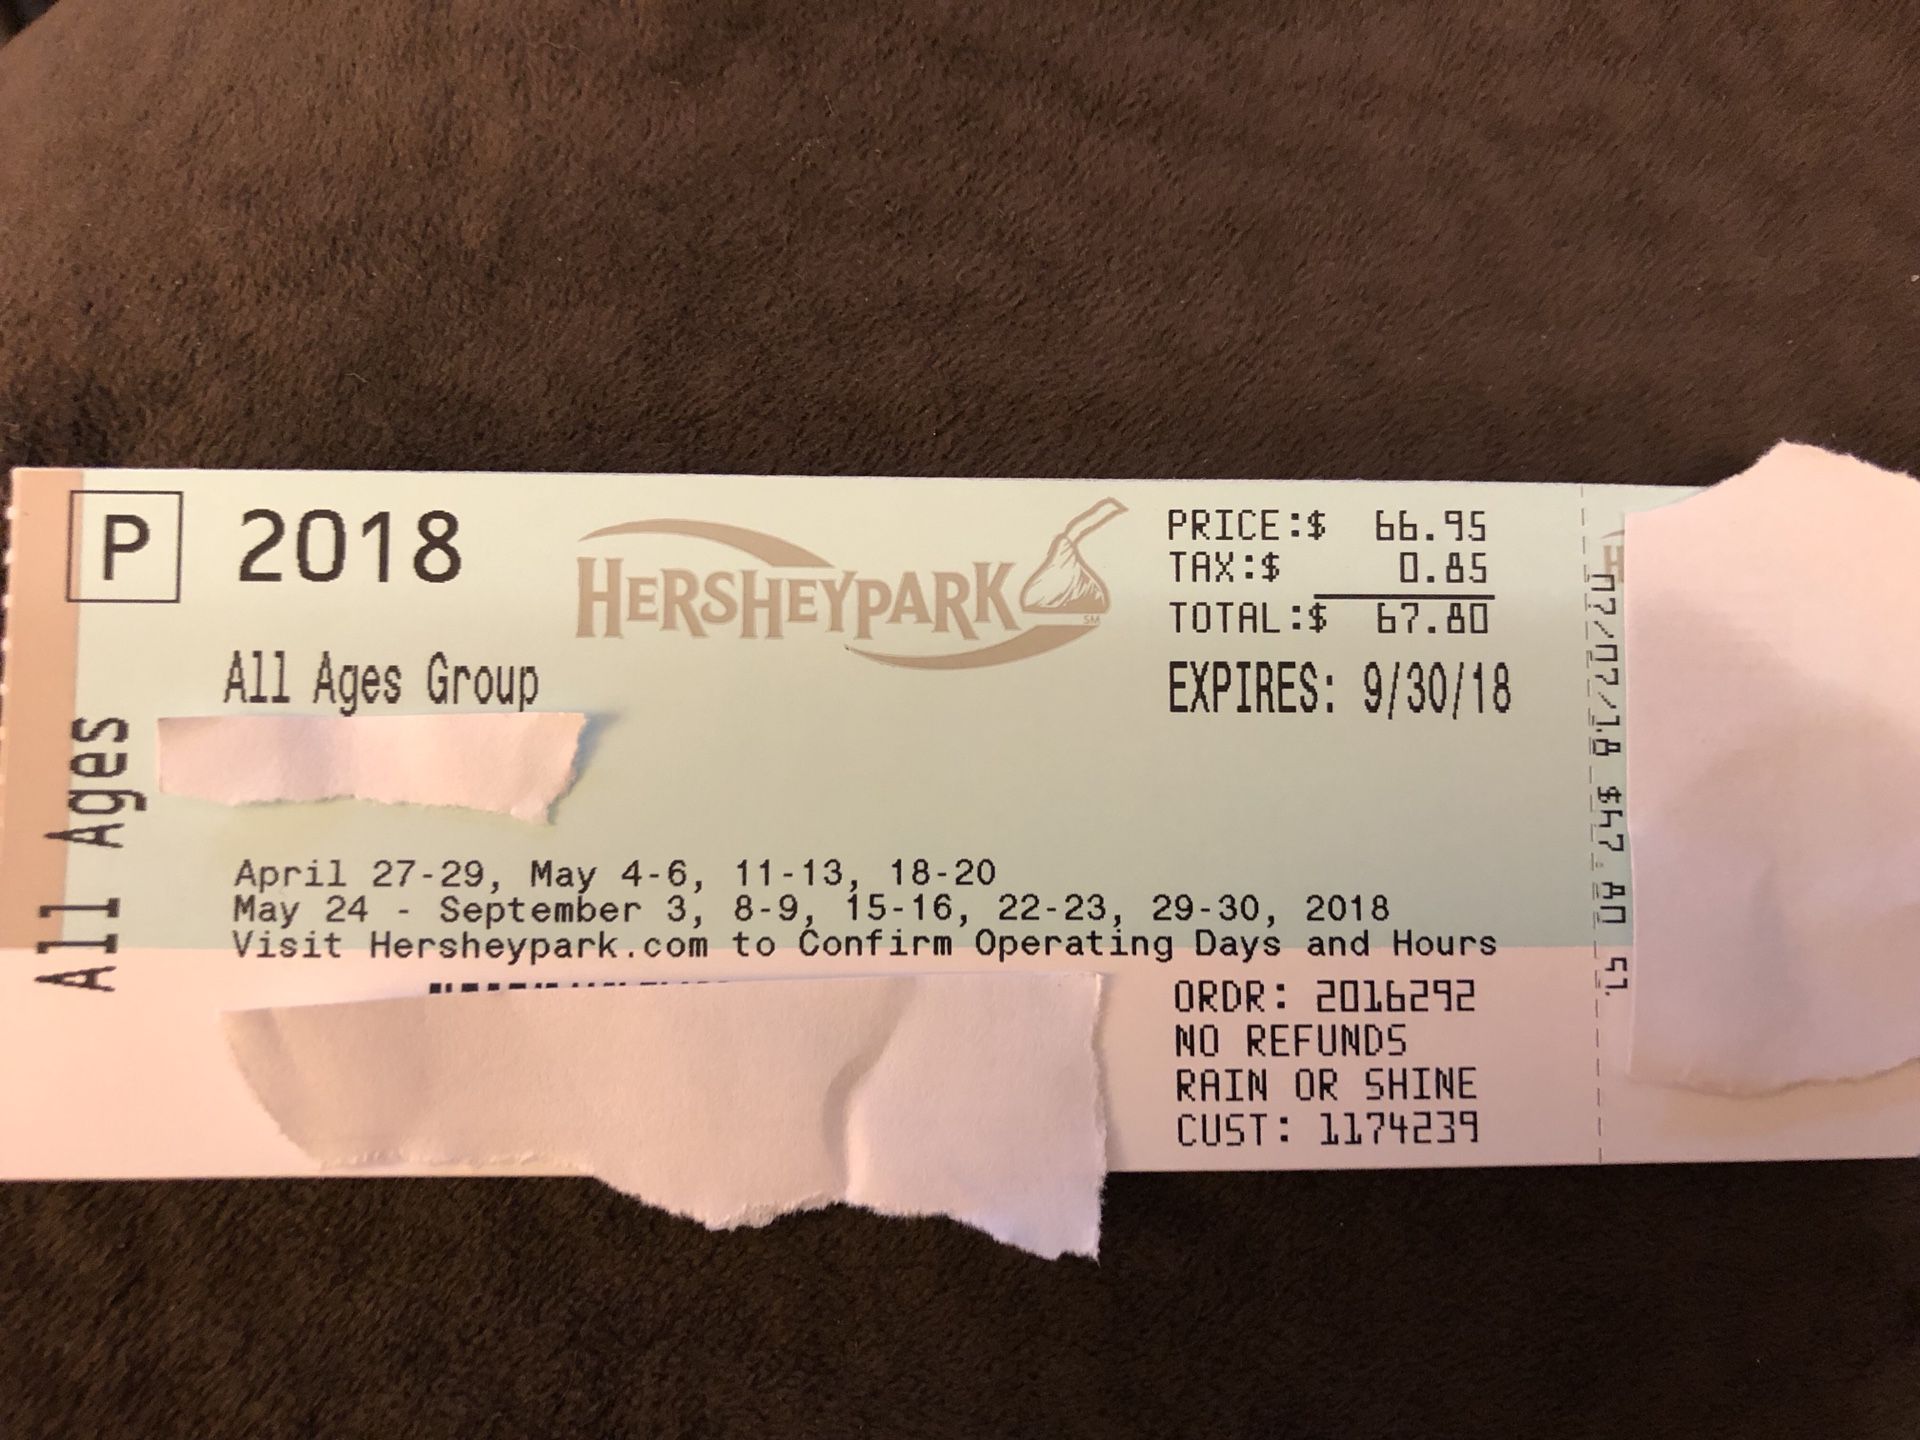 3 Hersheypark tickets